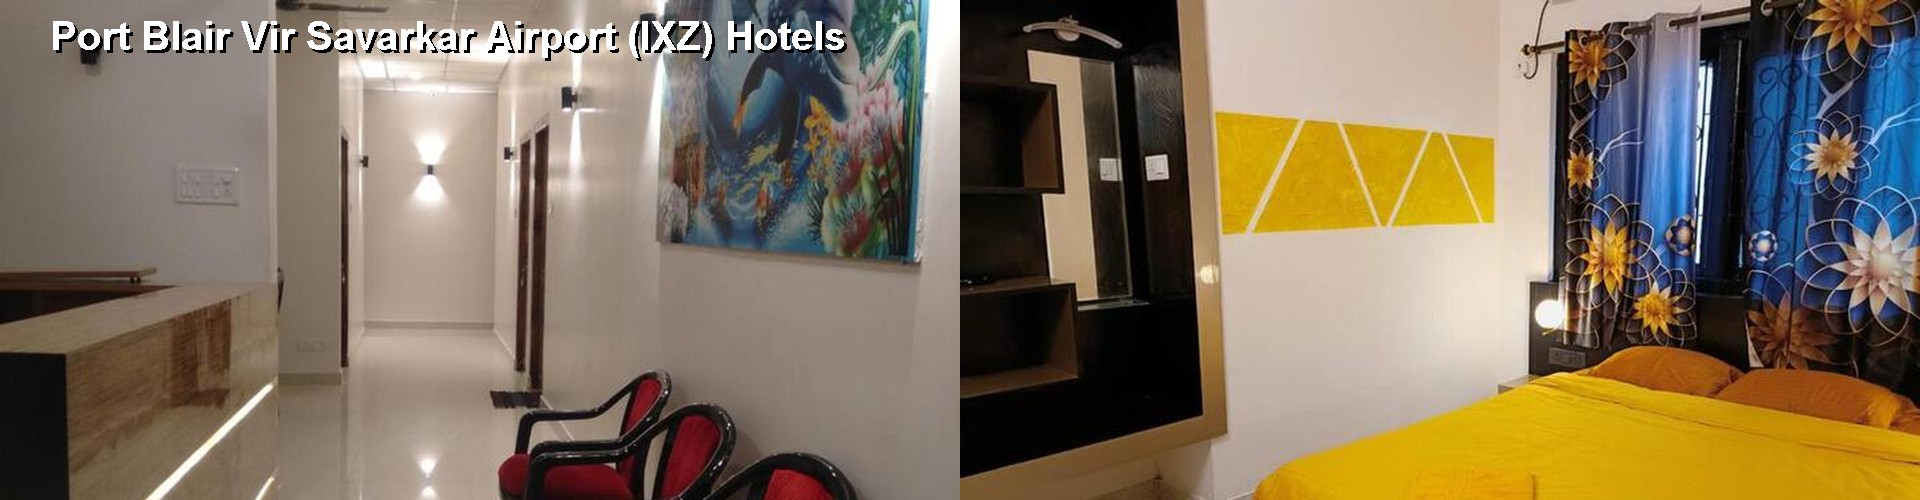 4 Best Hotels near Port Blair Vir Savarkar Airport (IXZ)